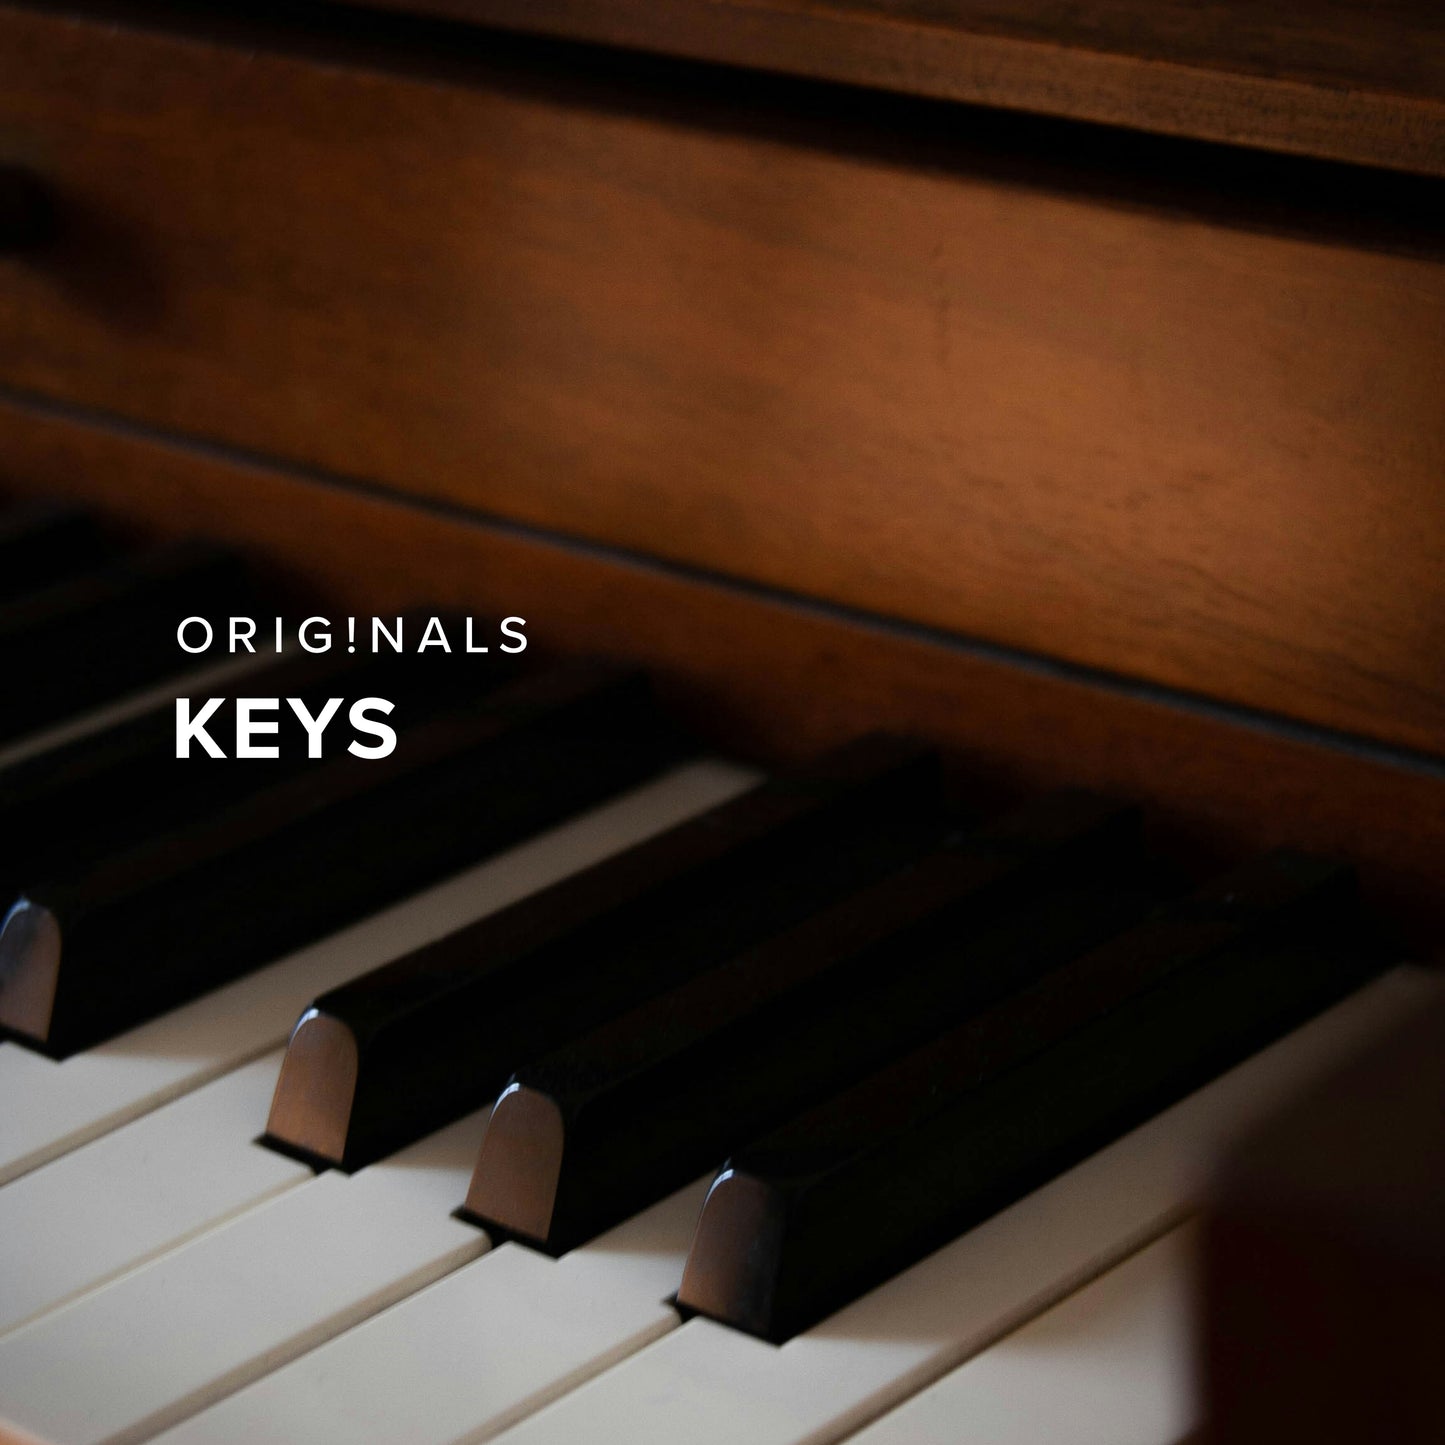 Originals Keys